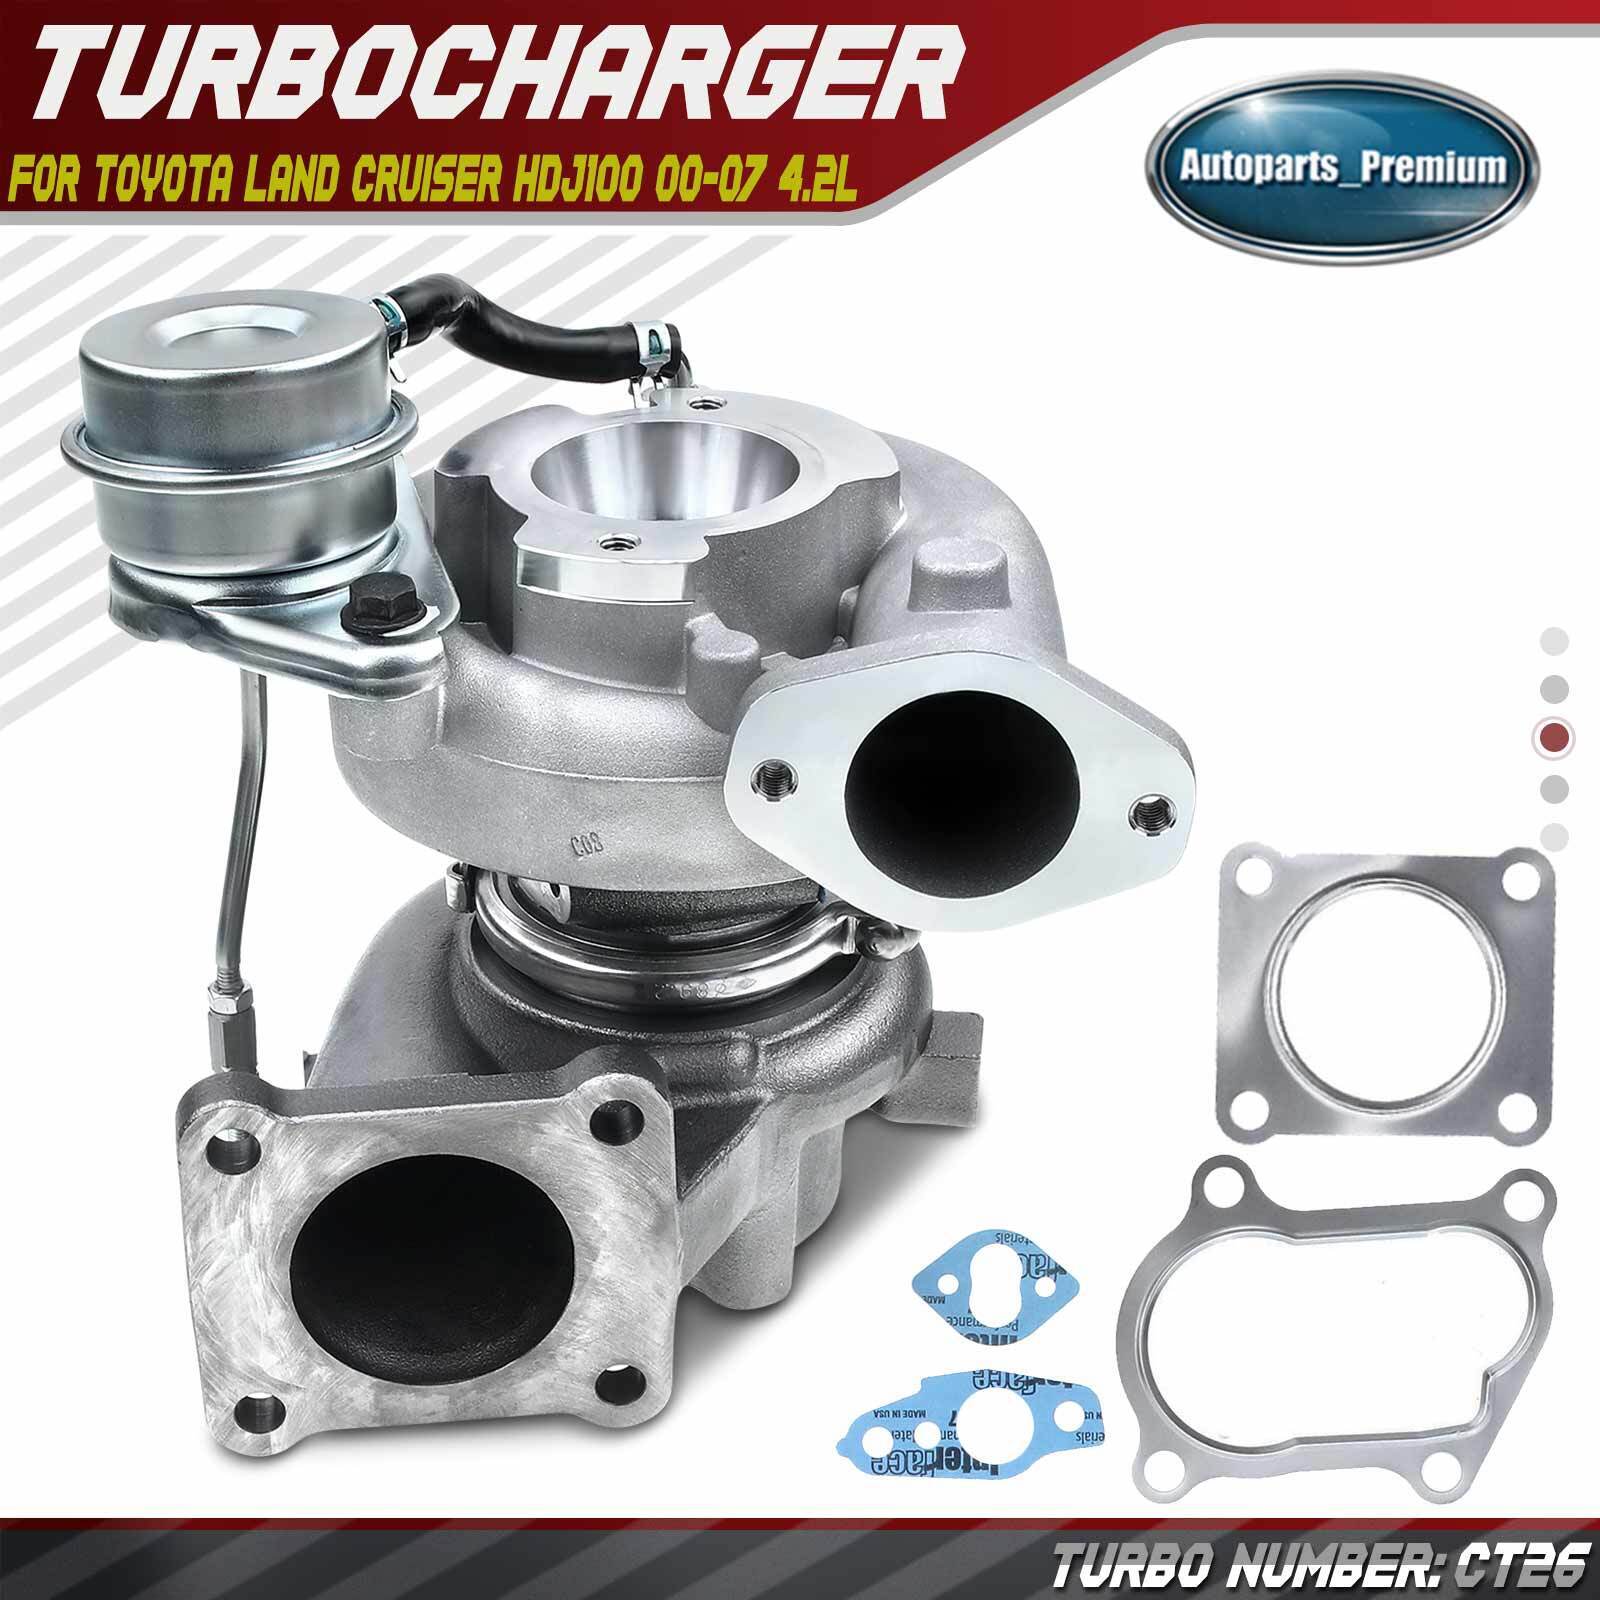 Turbo Turbocharger for Toyota Land Cruiser HDJ100 2000-2007 4.2L 1HD-FTE CT26